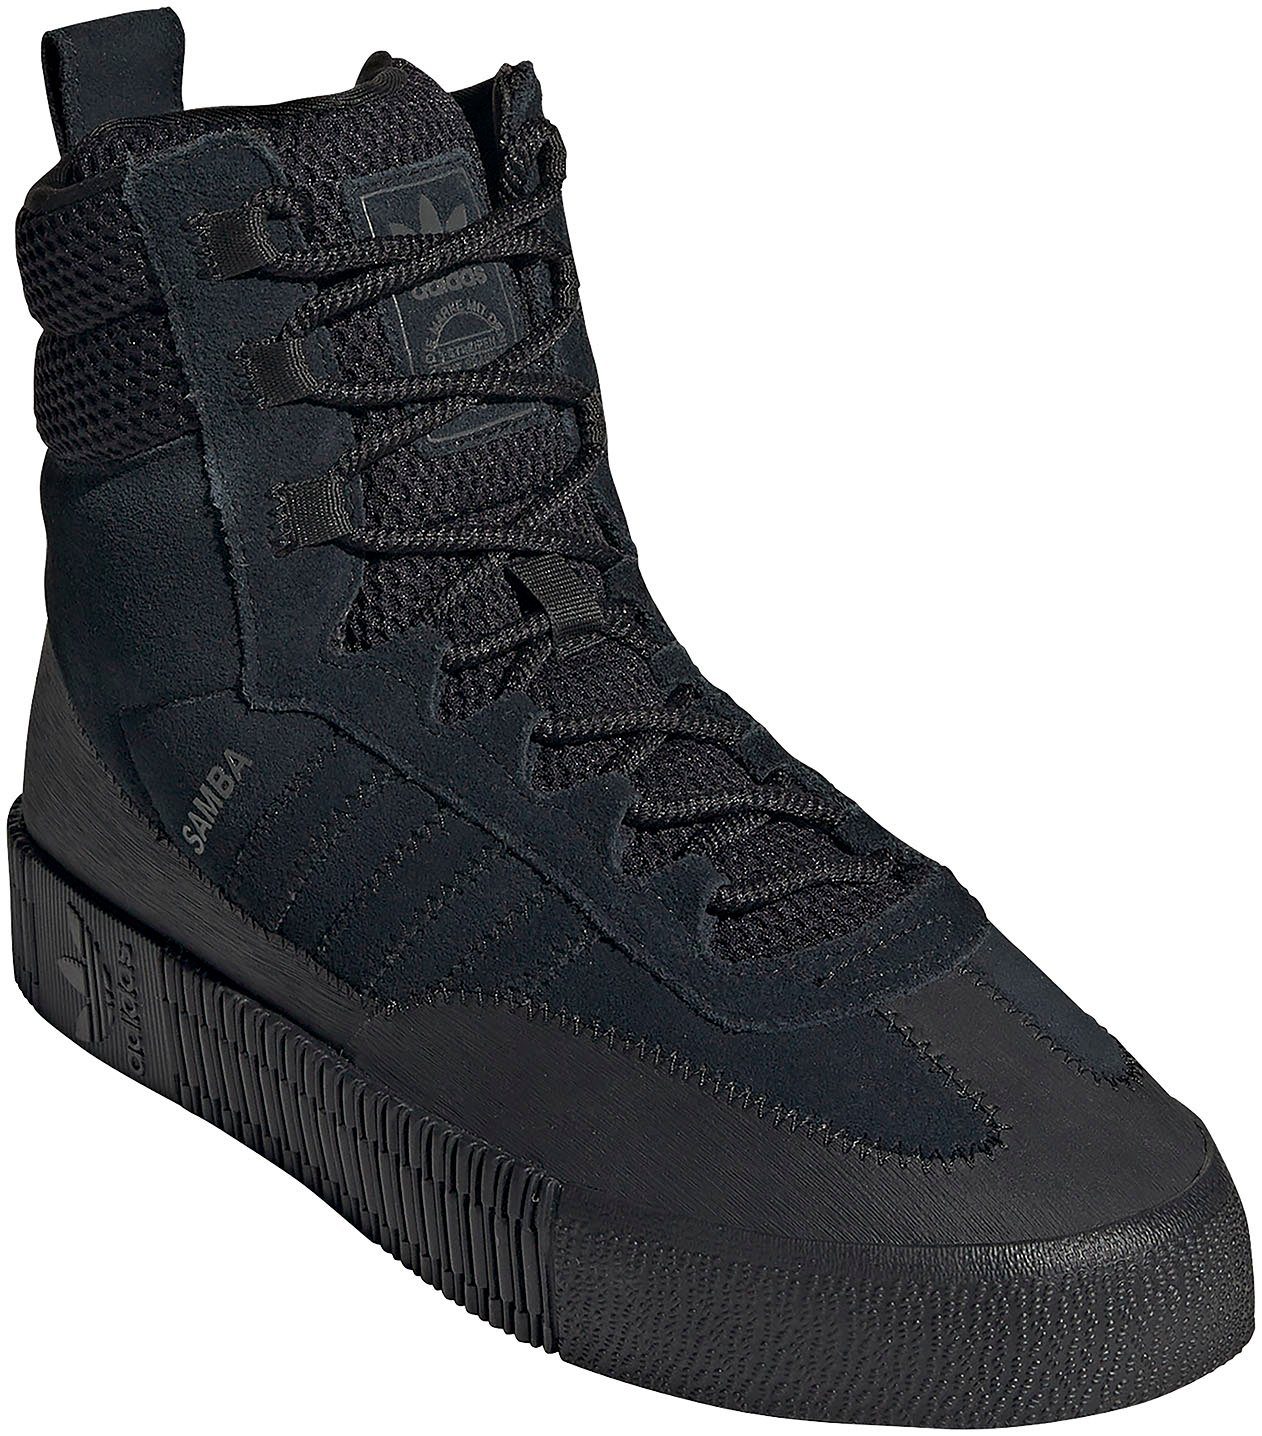 adidas Originals »SAMBA SAMBAROSE« Sneaker kaufen | OTTO